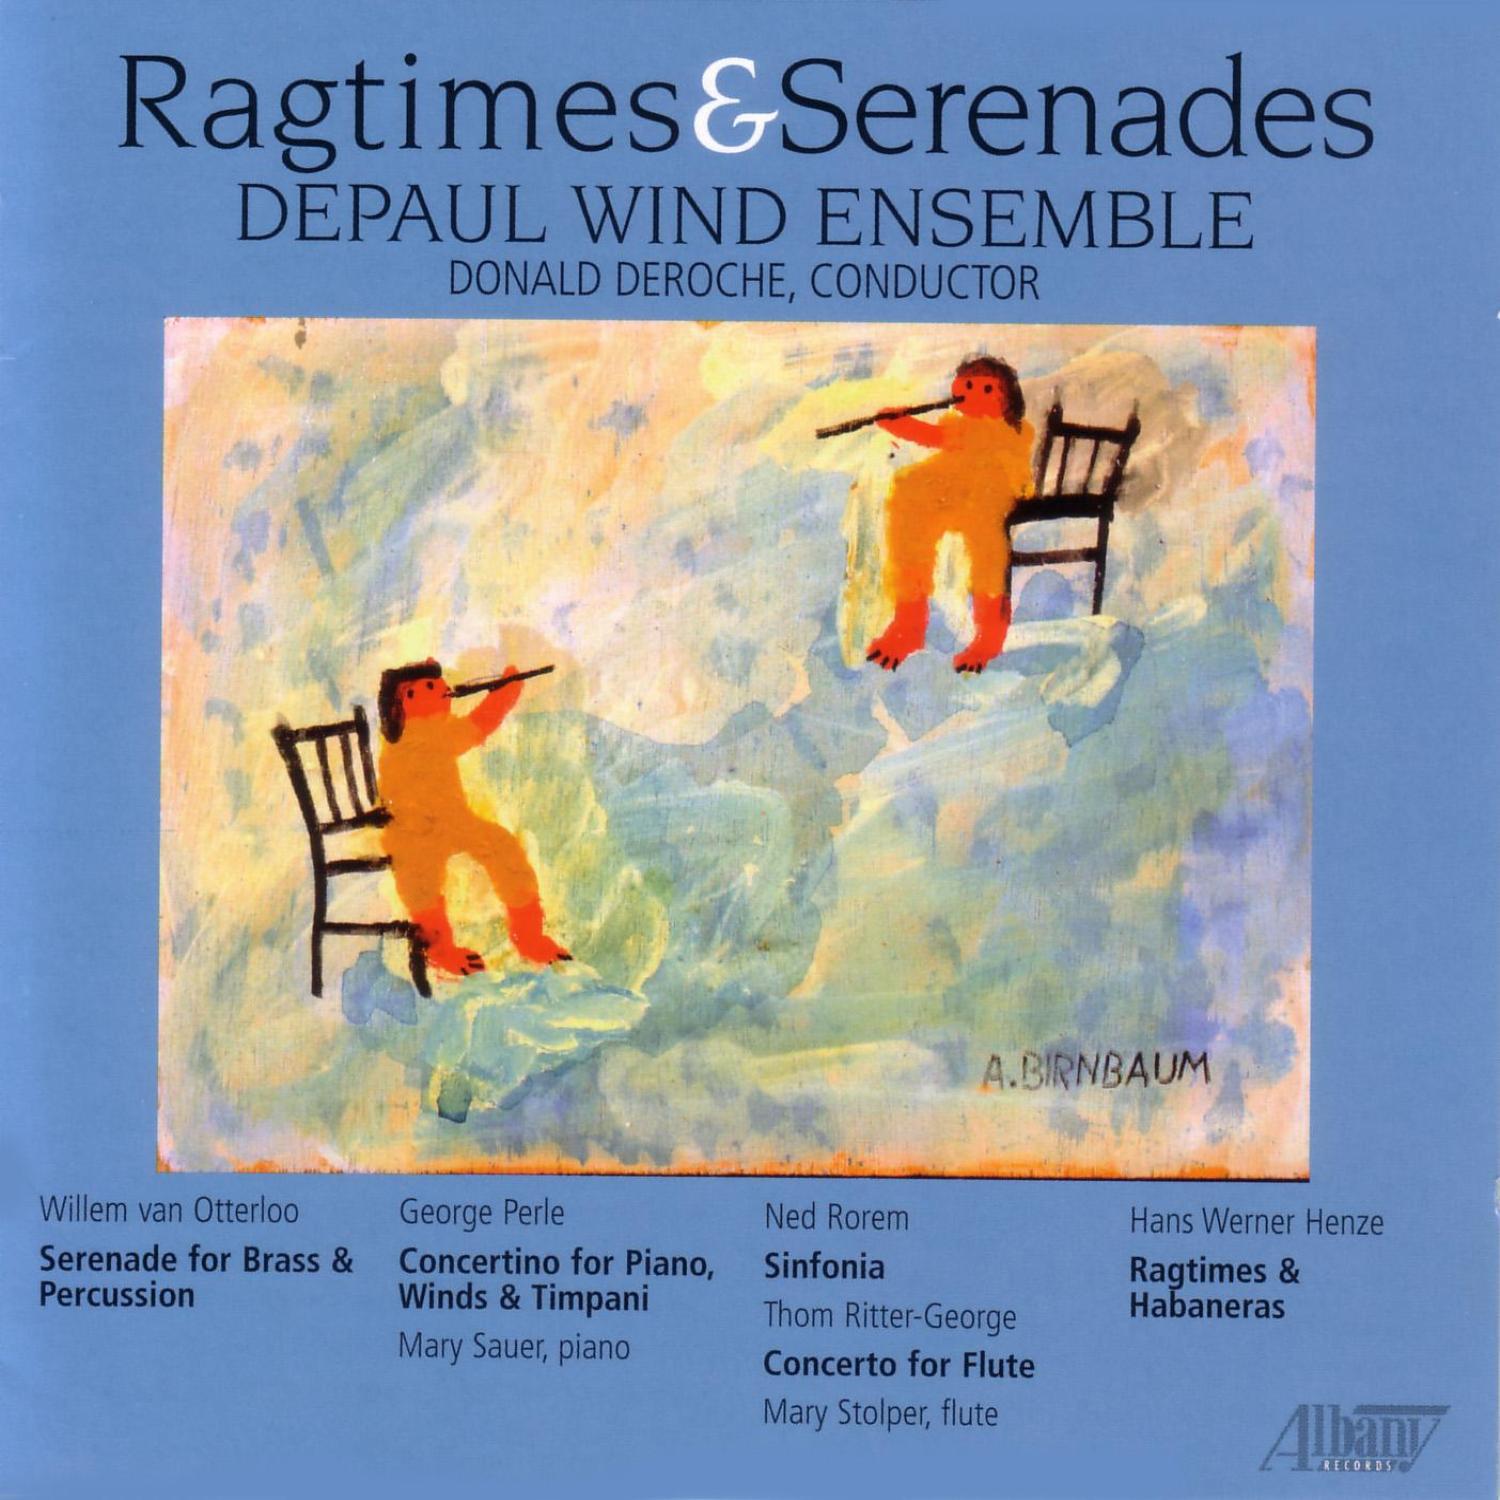 DePaul Wind Ensemble - Ragtimes & Habaneras: Temppo di Foxtrot